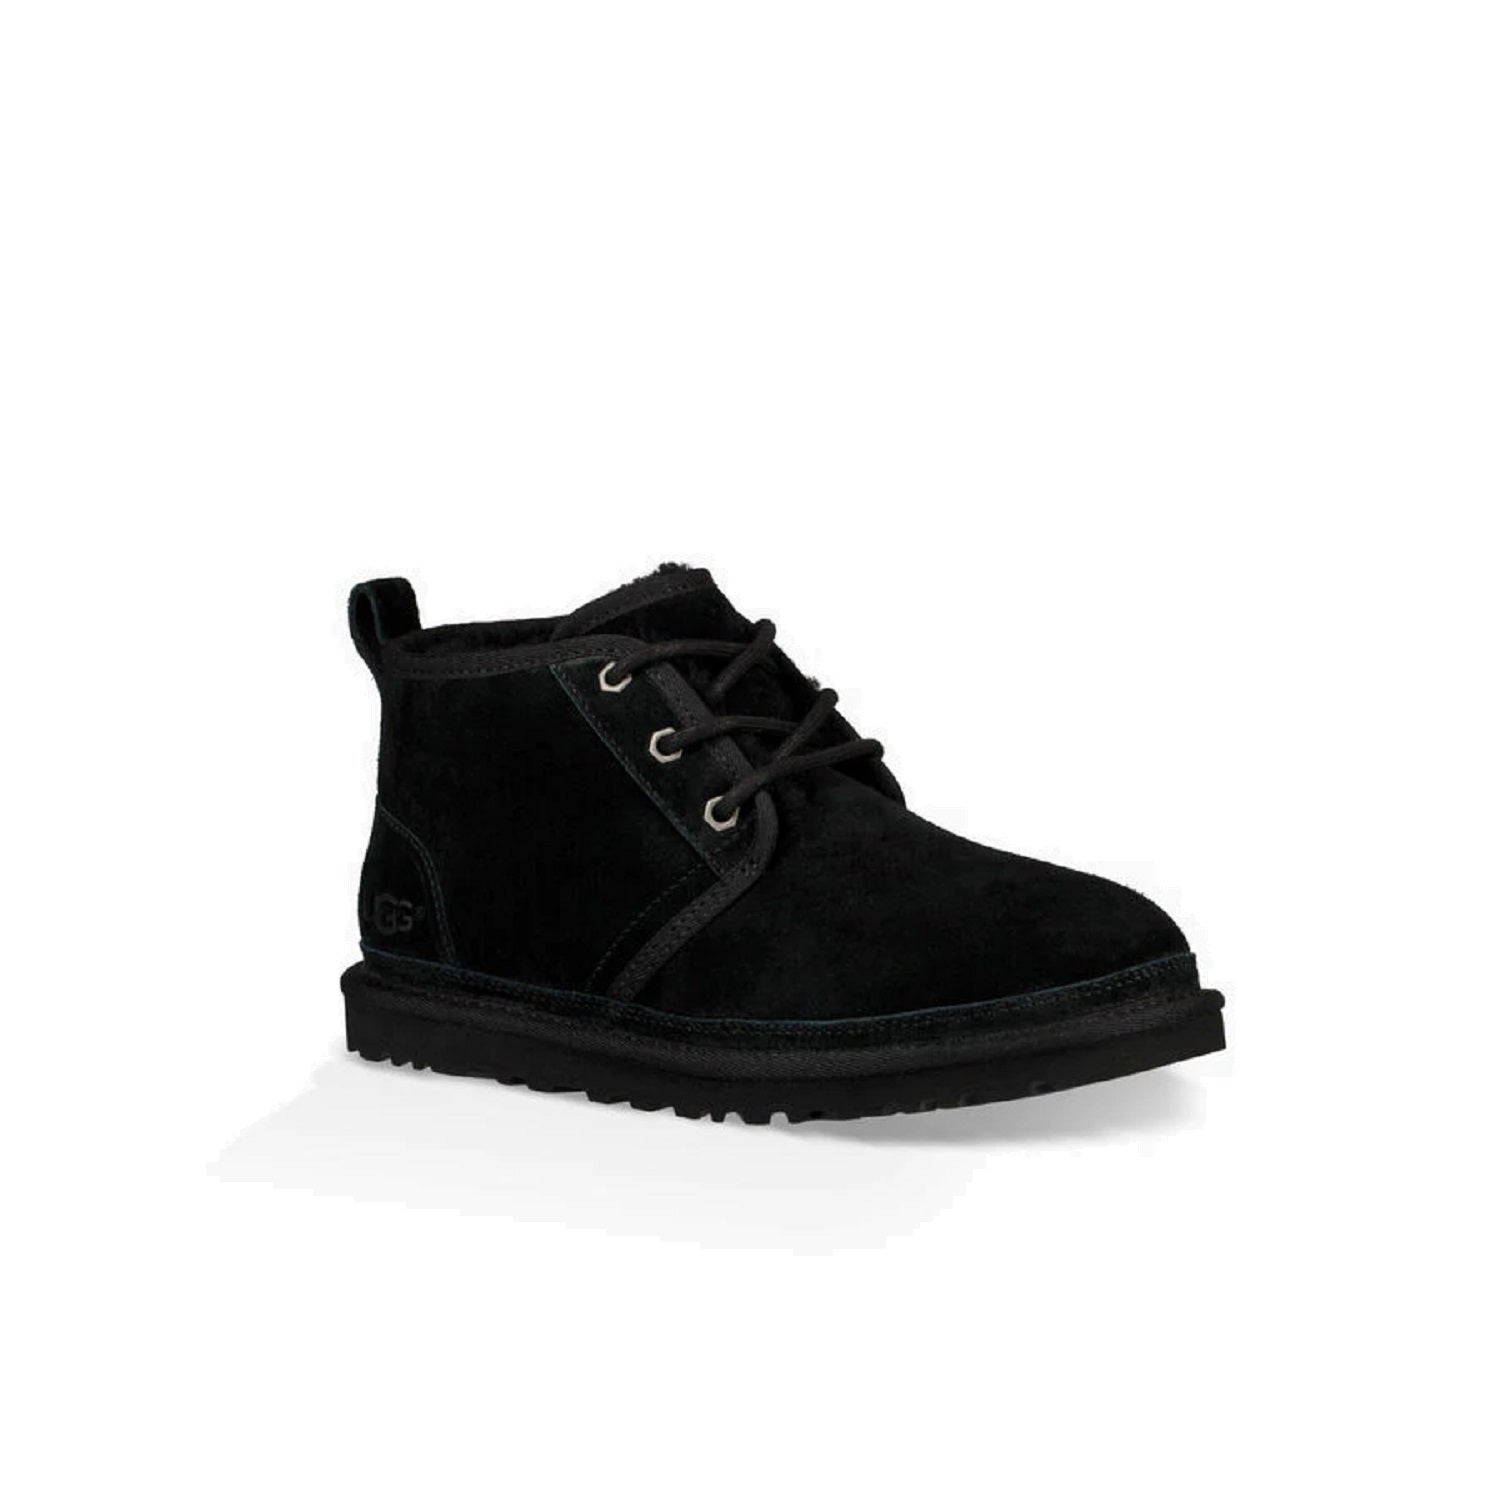 Neumel Boot (Black)